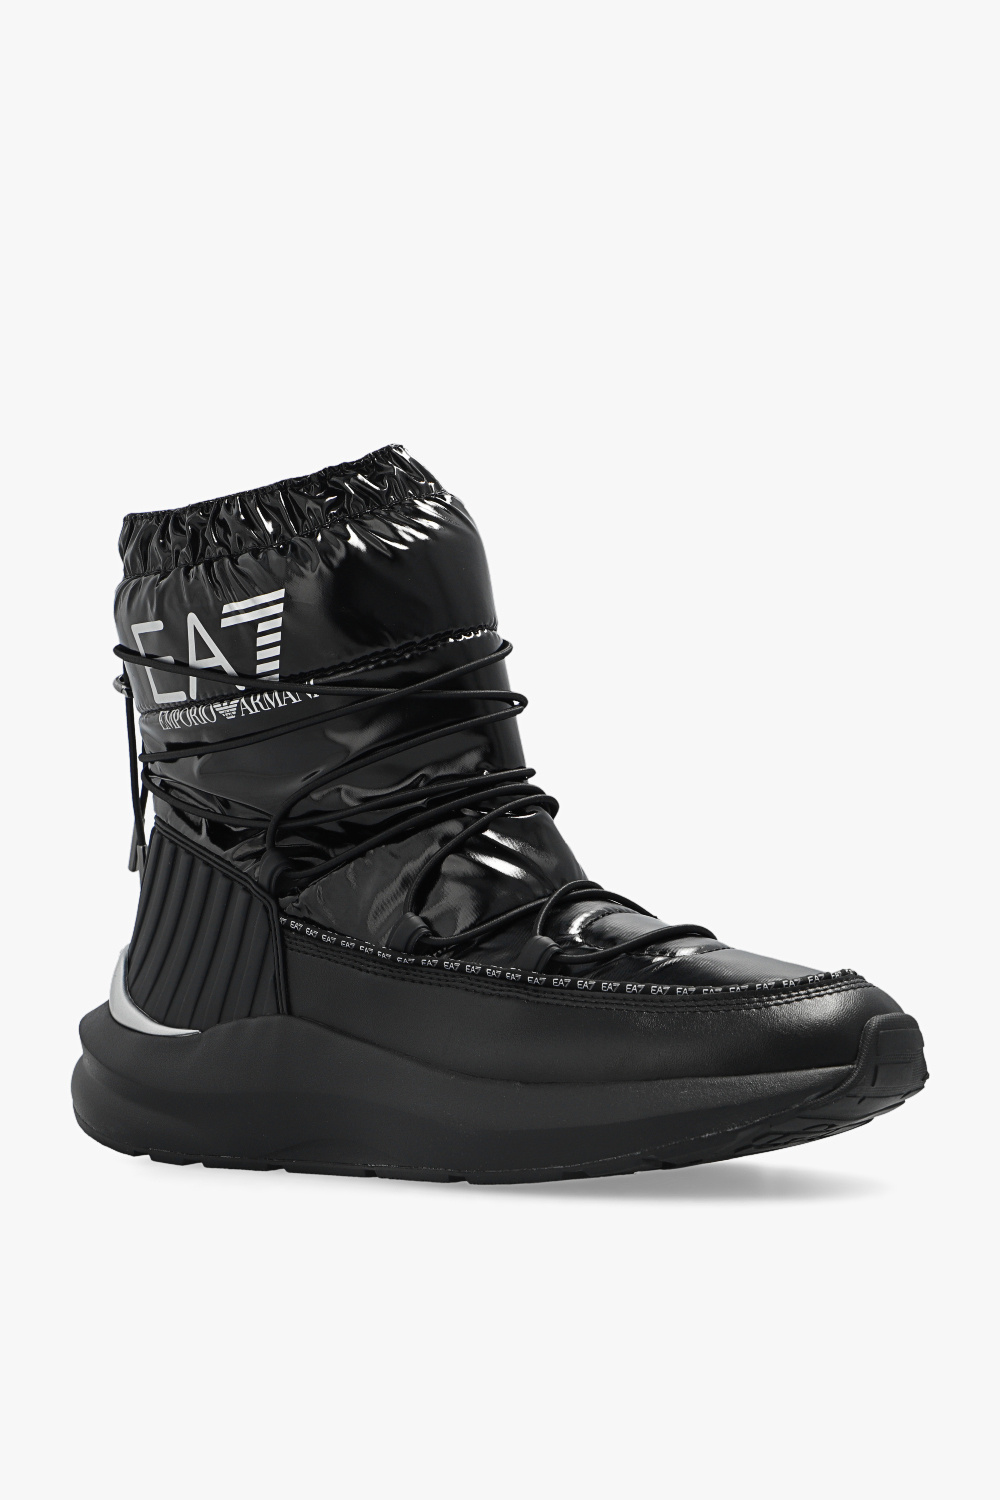 EA7 Emporio Armani Snow boots with logo